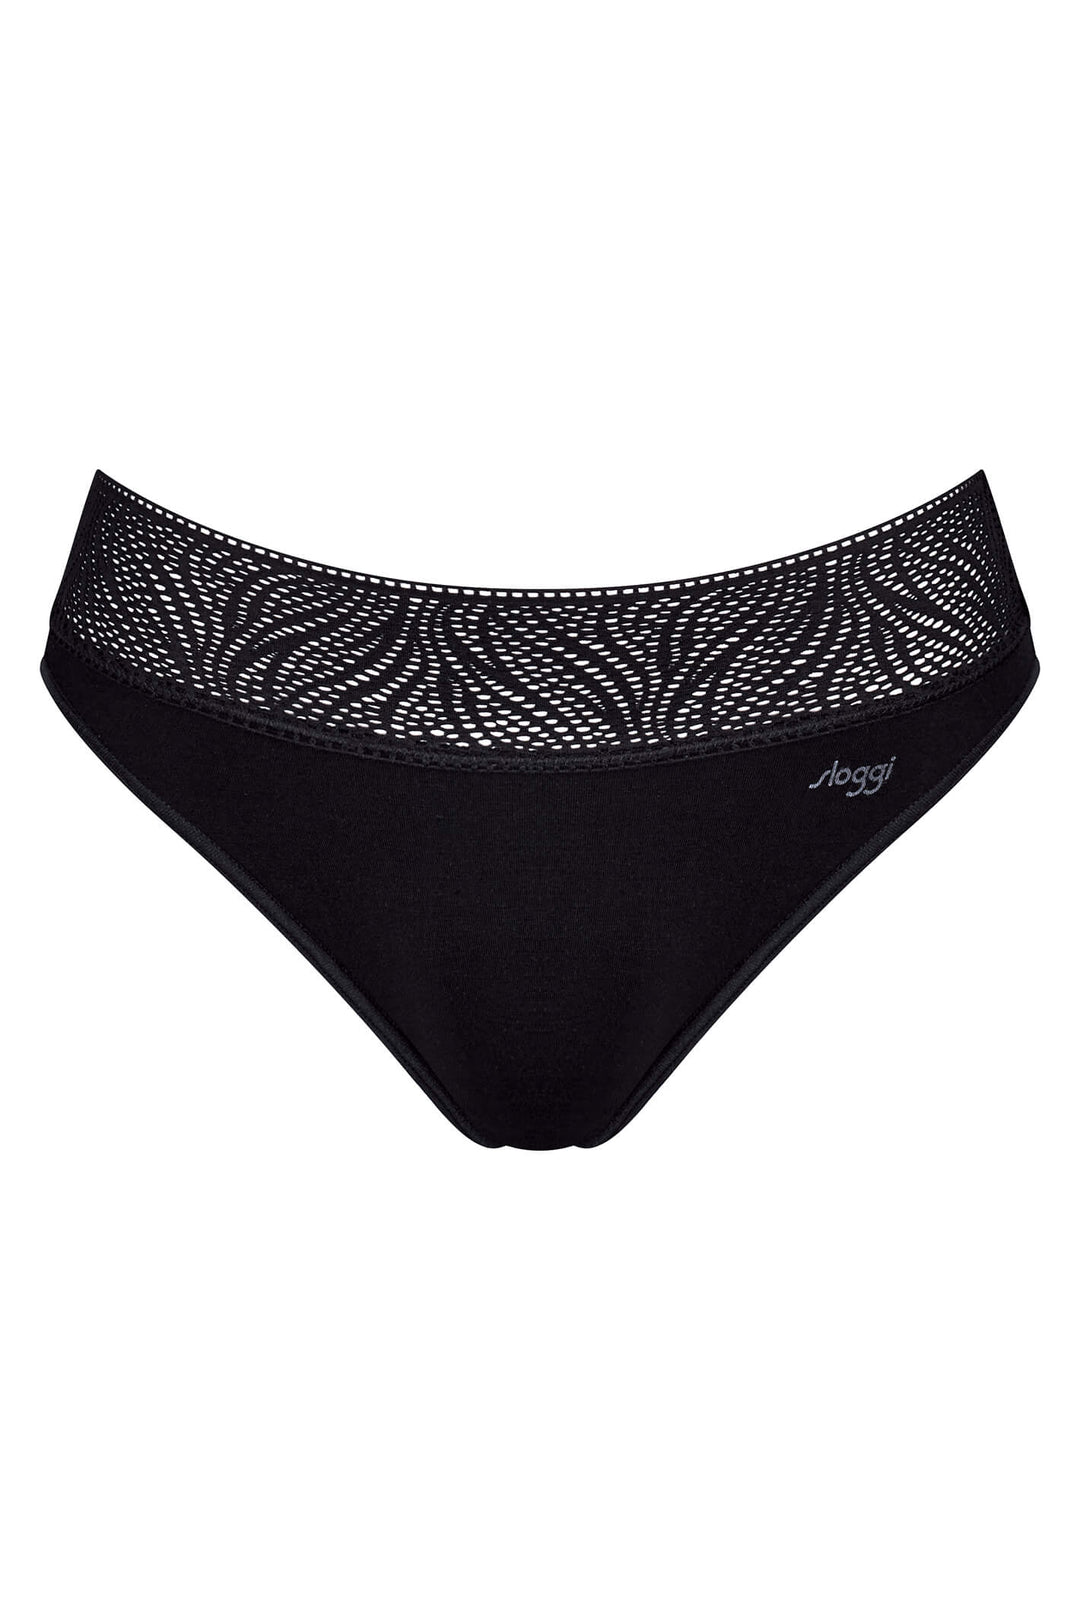 Sloggi 10212941 0004 Tai Medium Black One Pack Period Pants - Shirley Allum Boutique